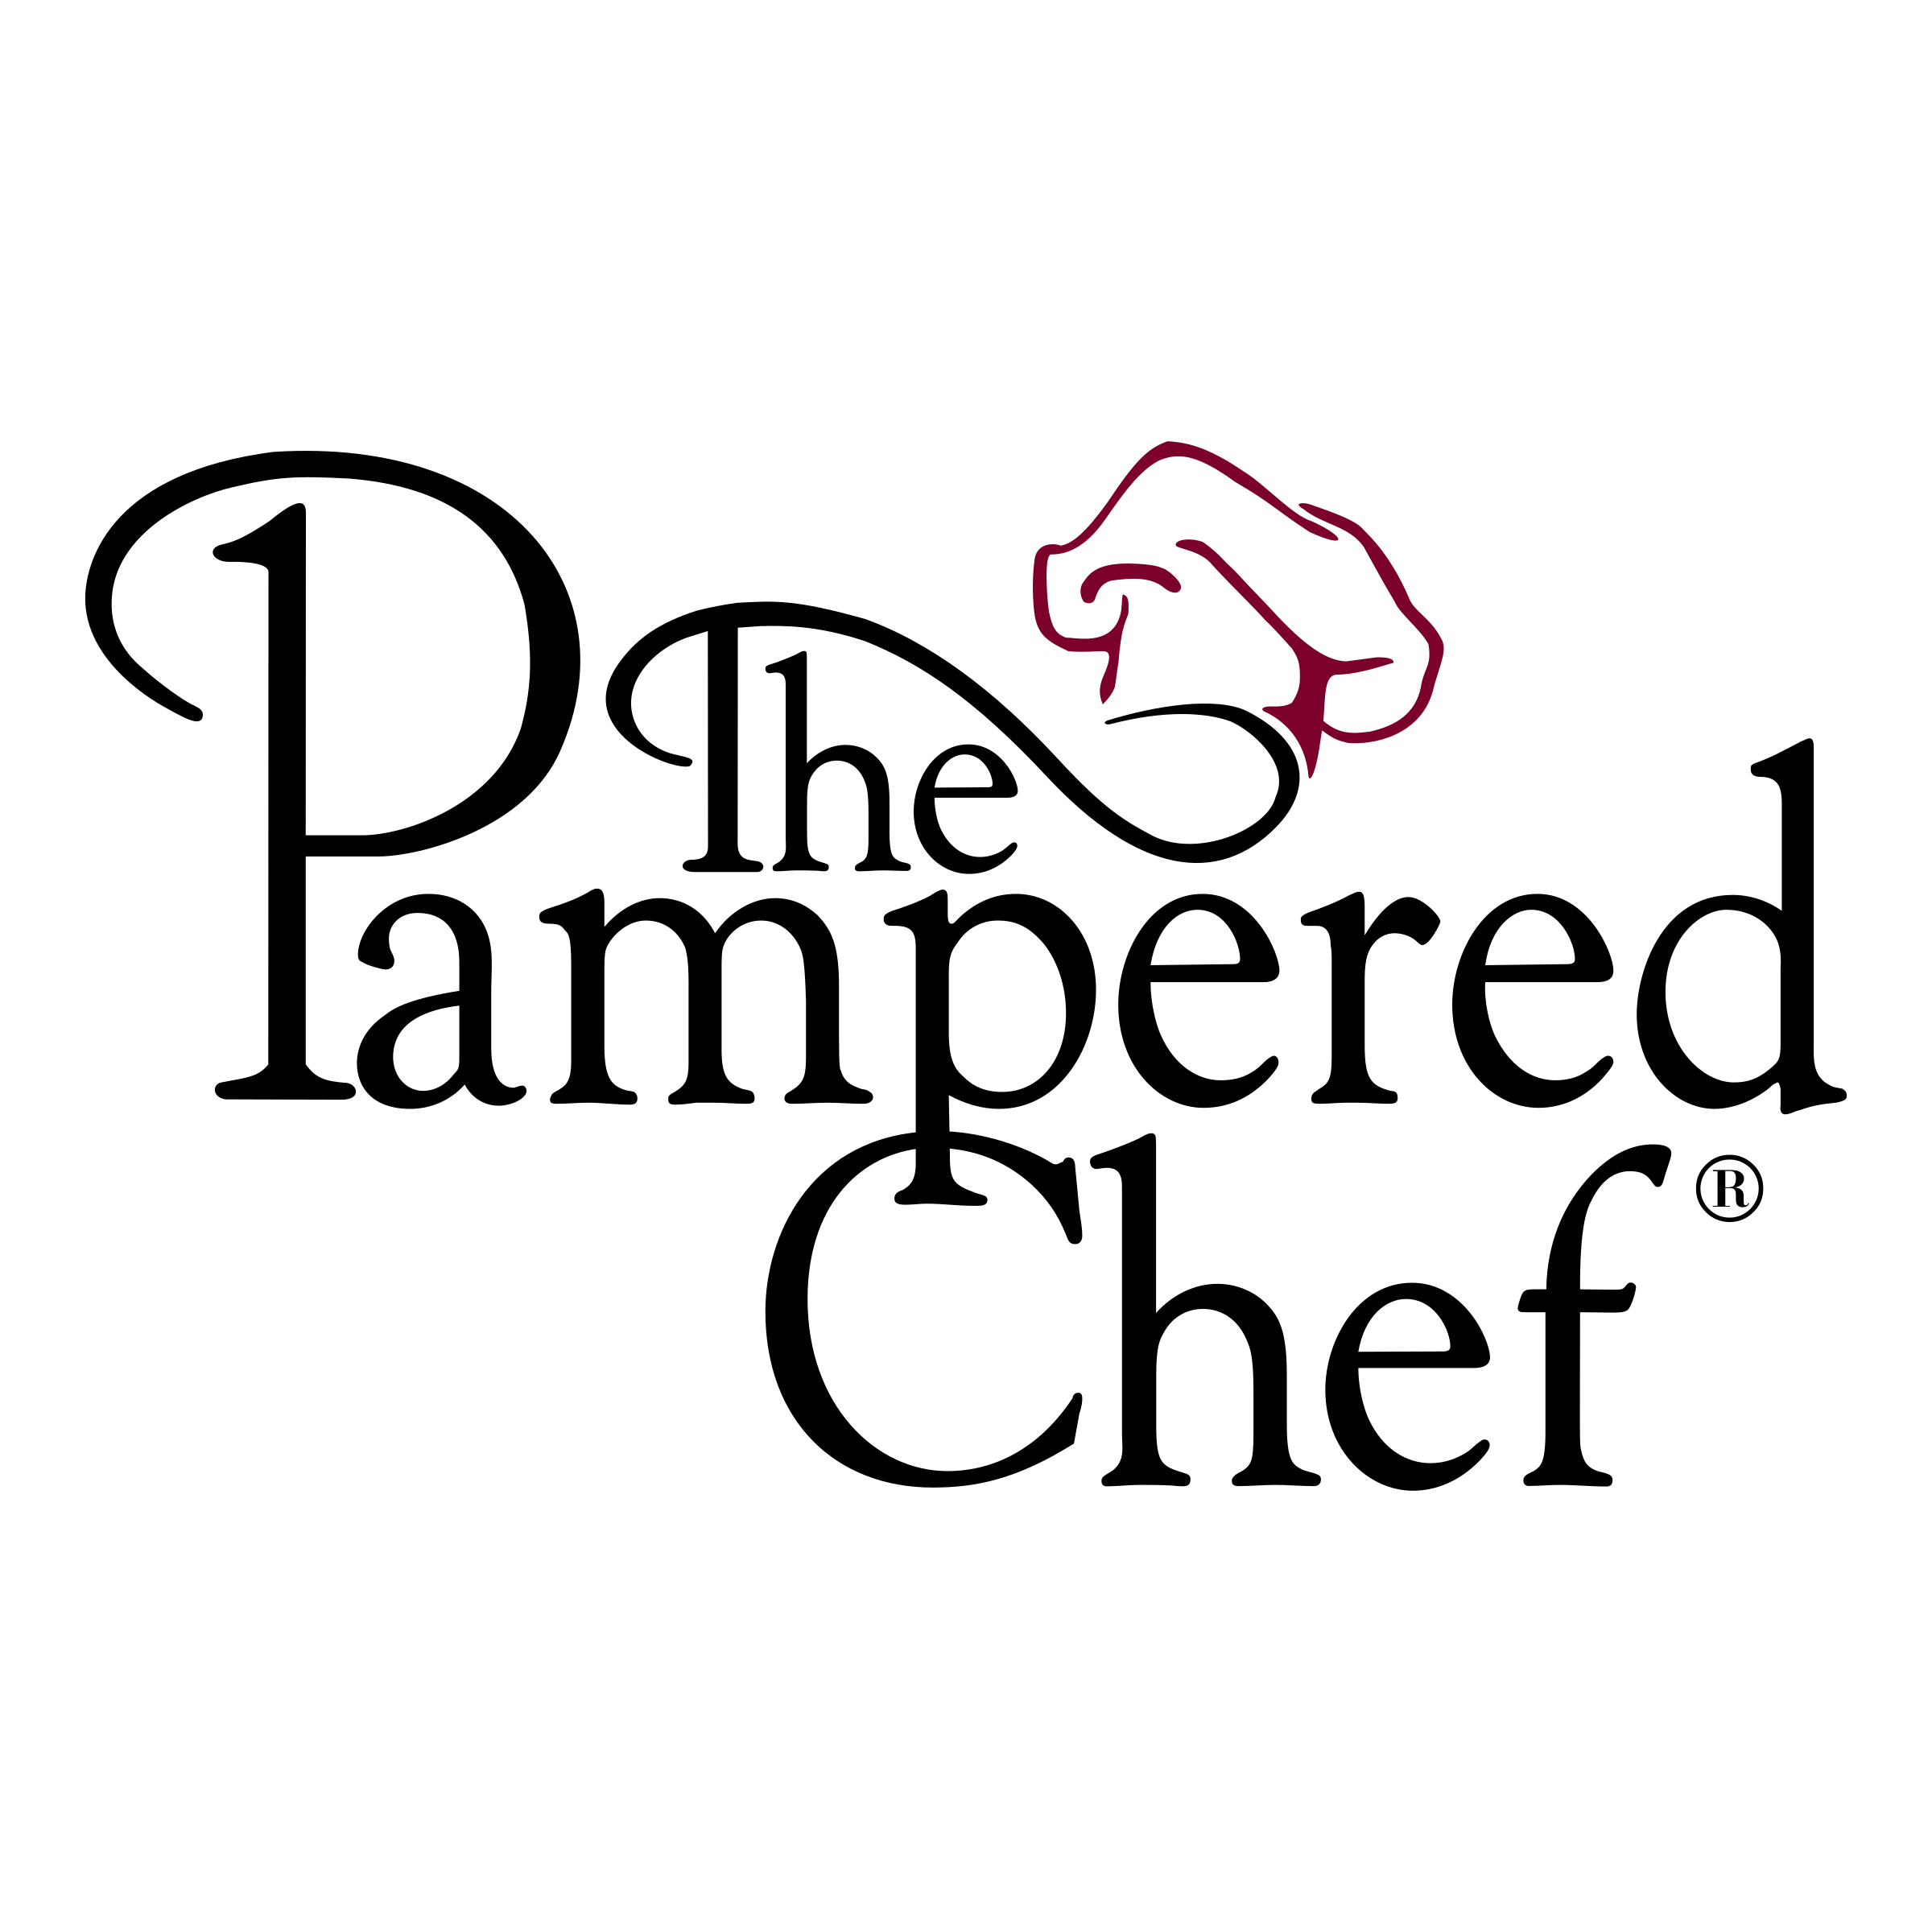 Pampered Chef Logo - The Pampered Chef Logo PNG Transparent & SVG Vector